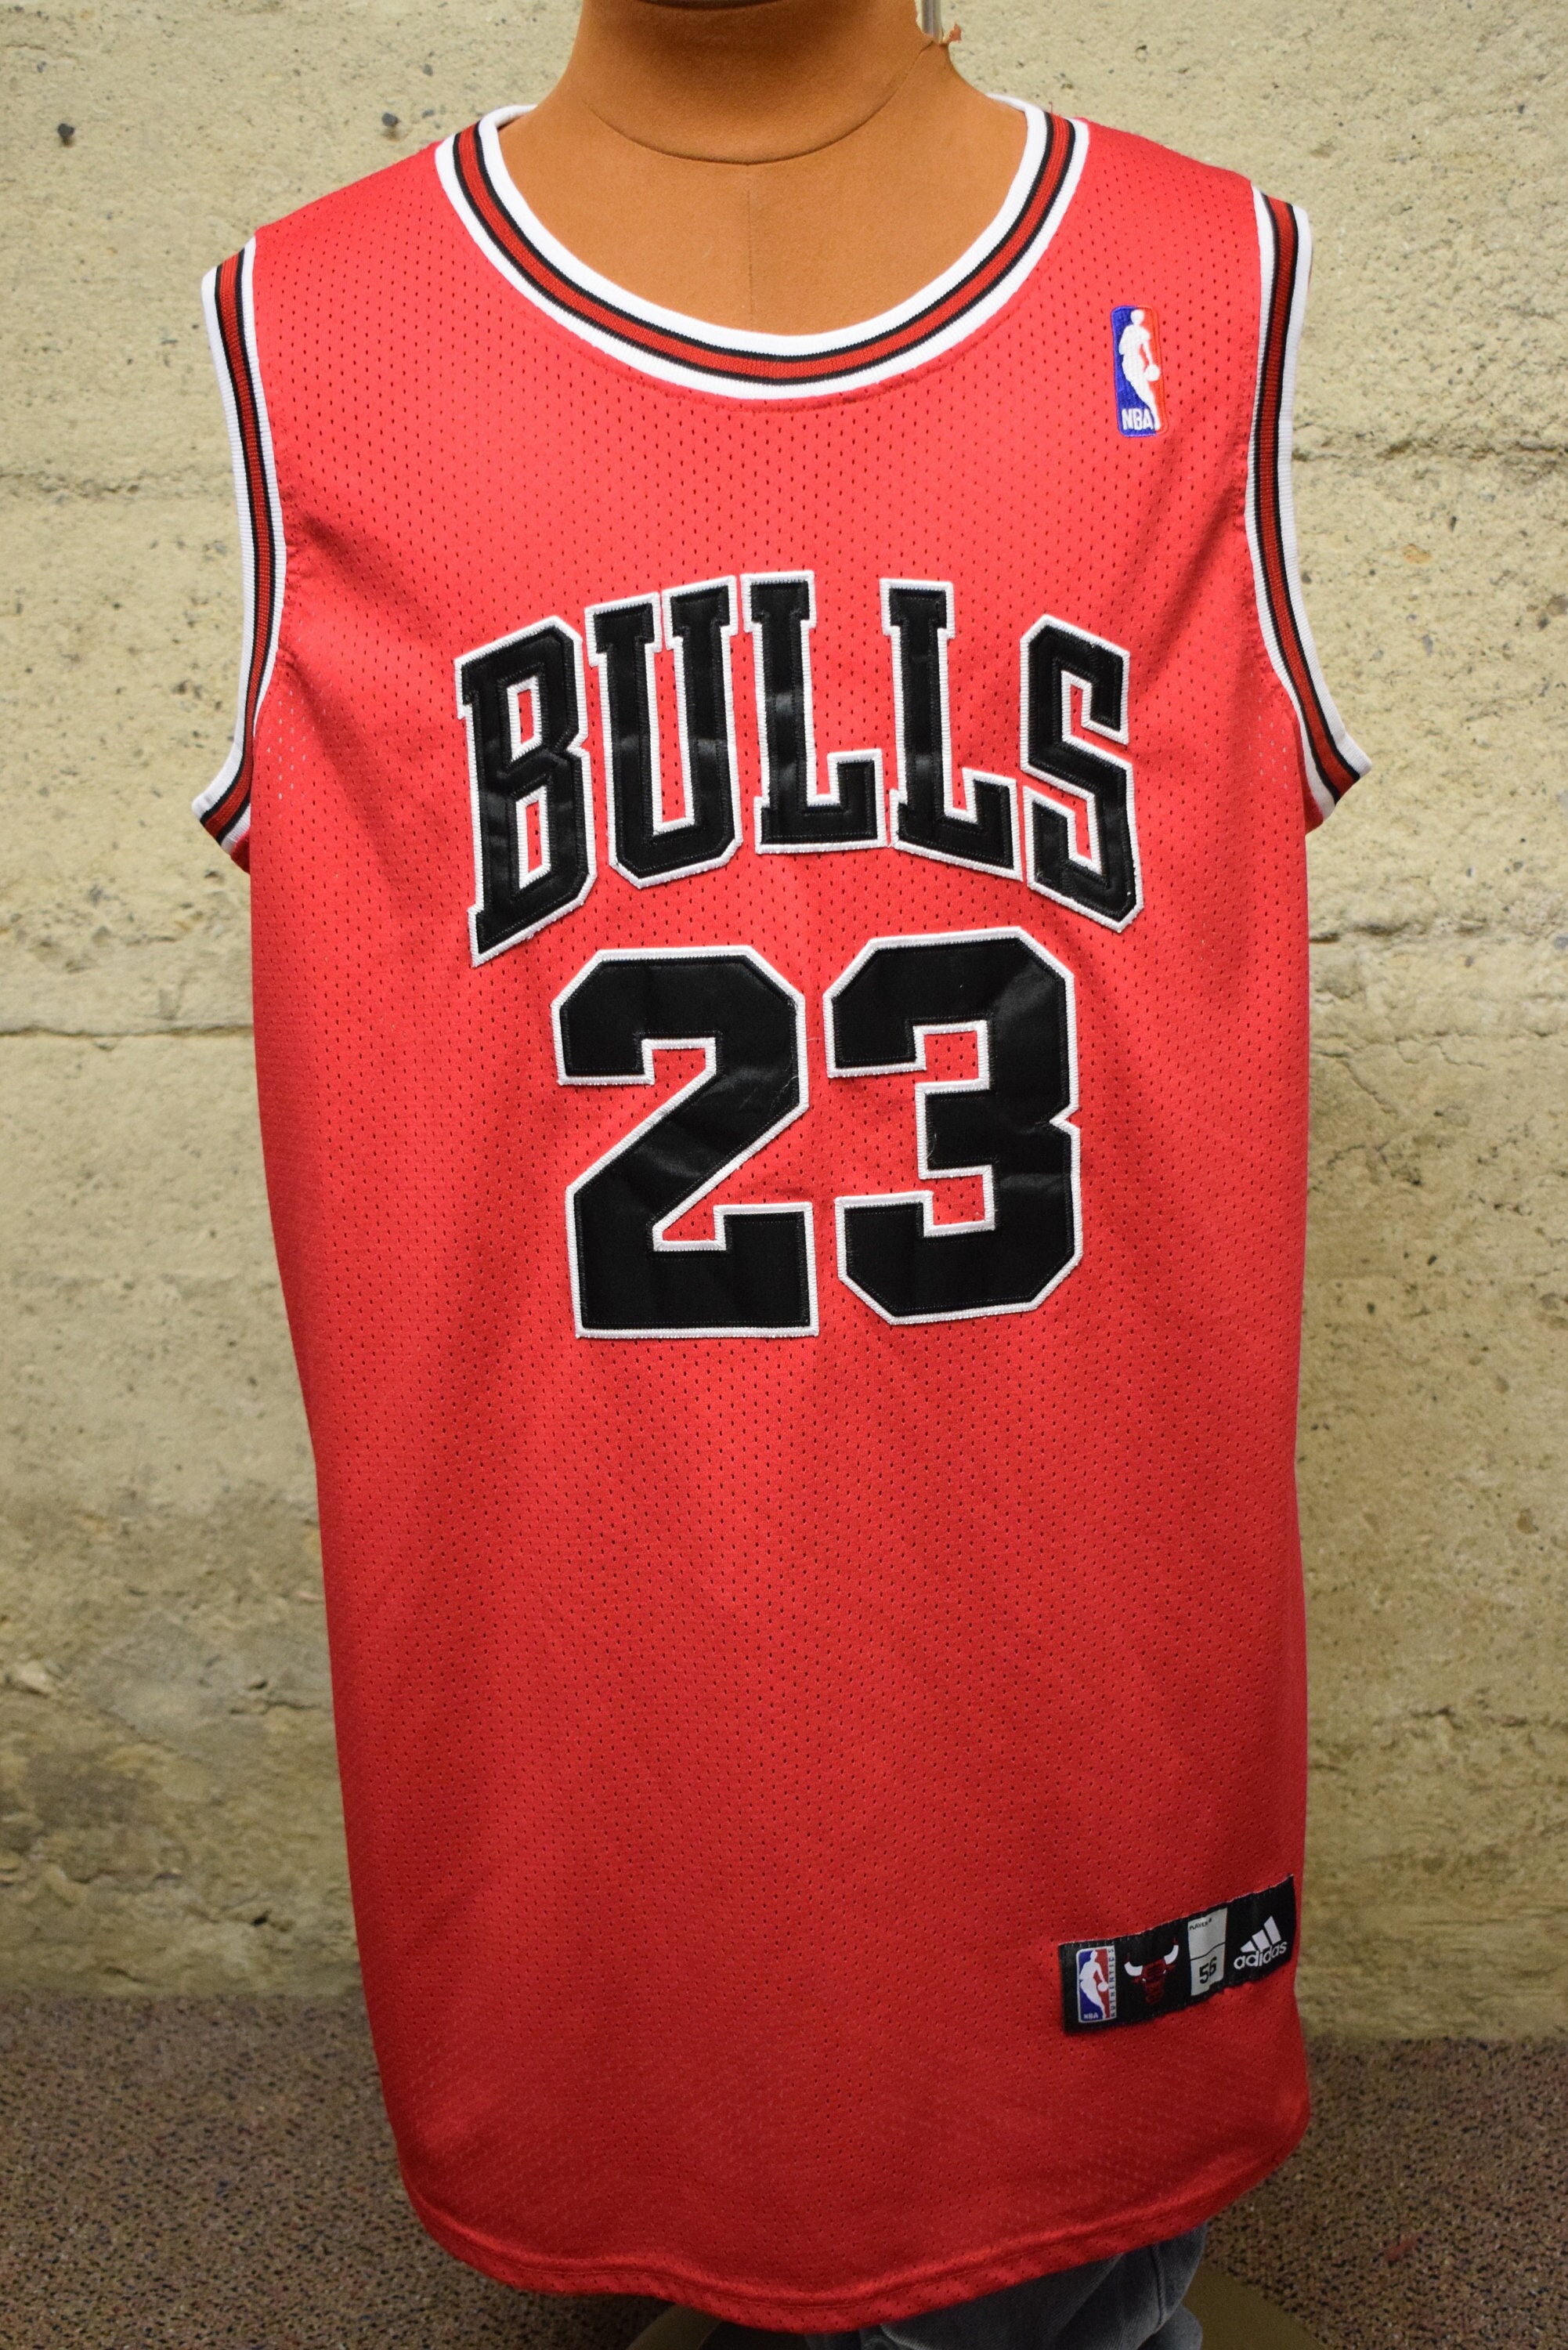 Red #23 Bulls Print Jersey Dress